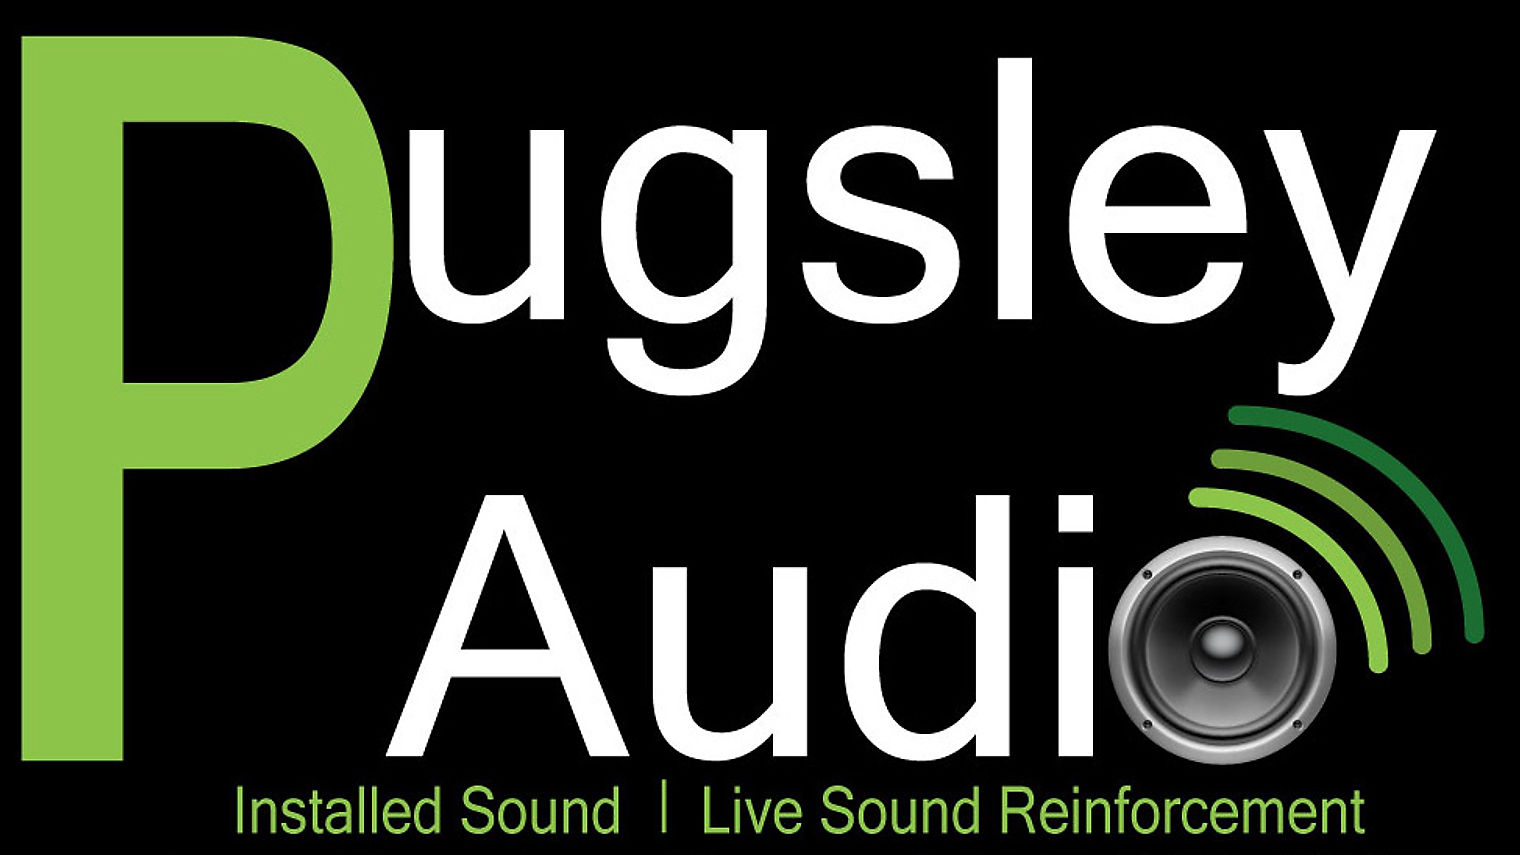 Pugsley Audio LLC